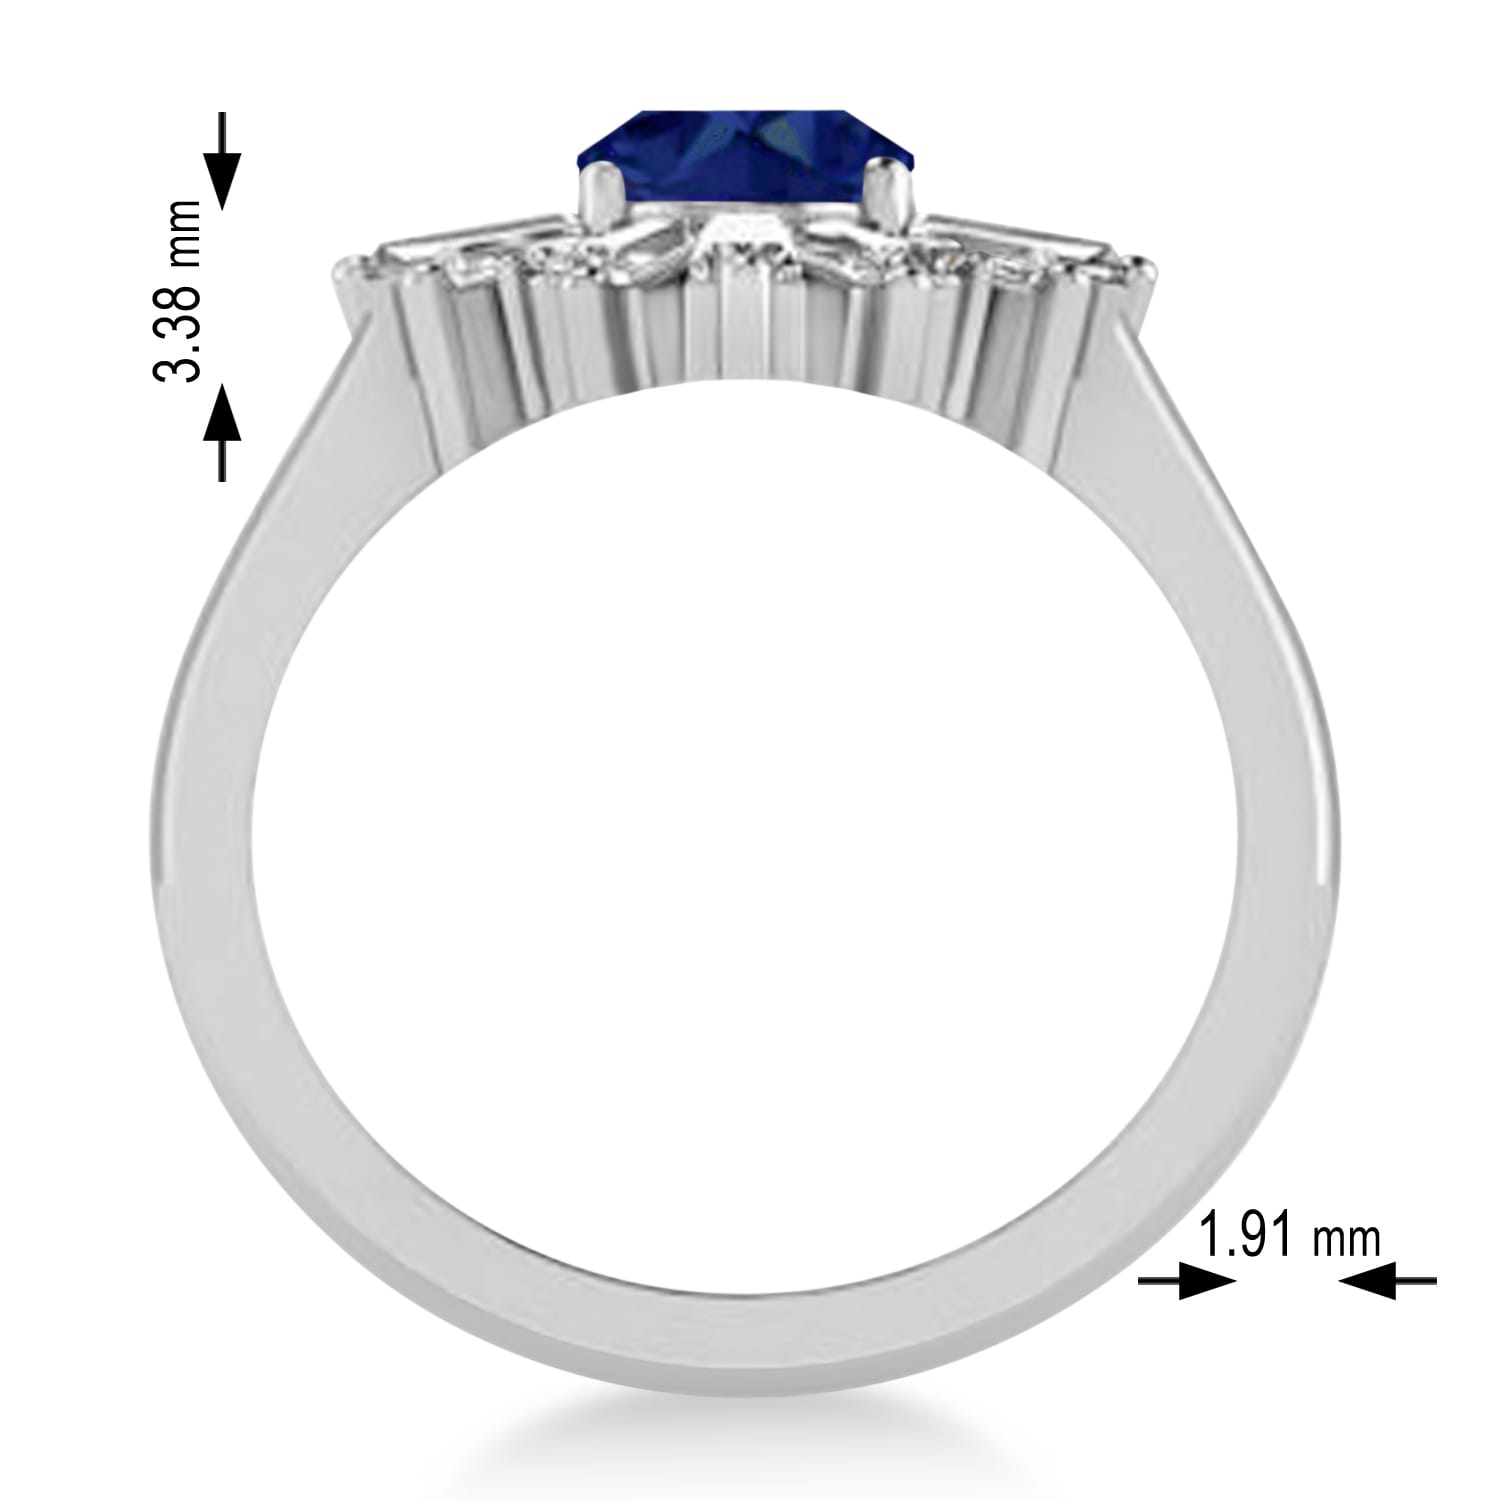 Blue Sapphire & Diamond Oval Cut Ballerina Engagement Ring 18k White Gold (3.06 ctw)